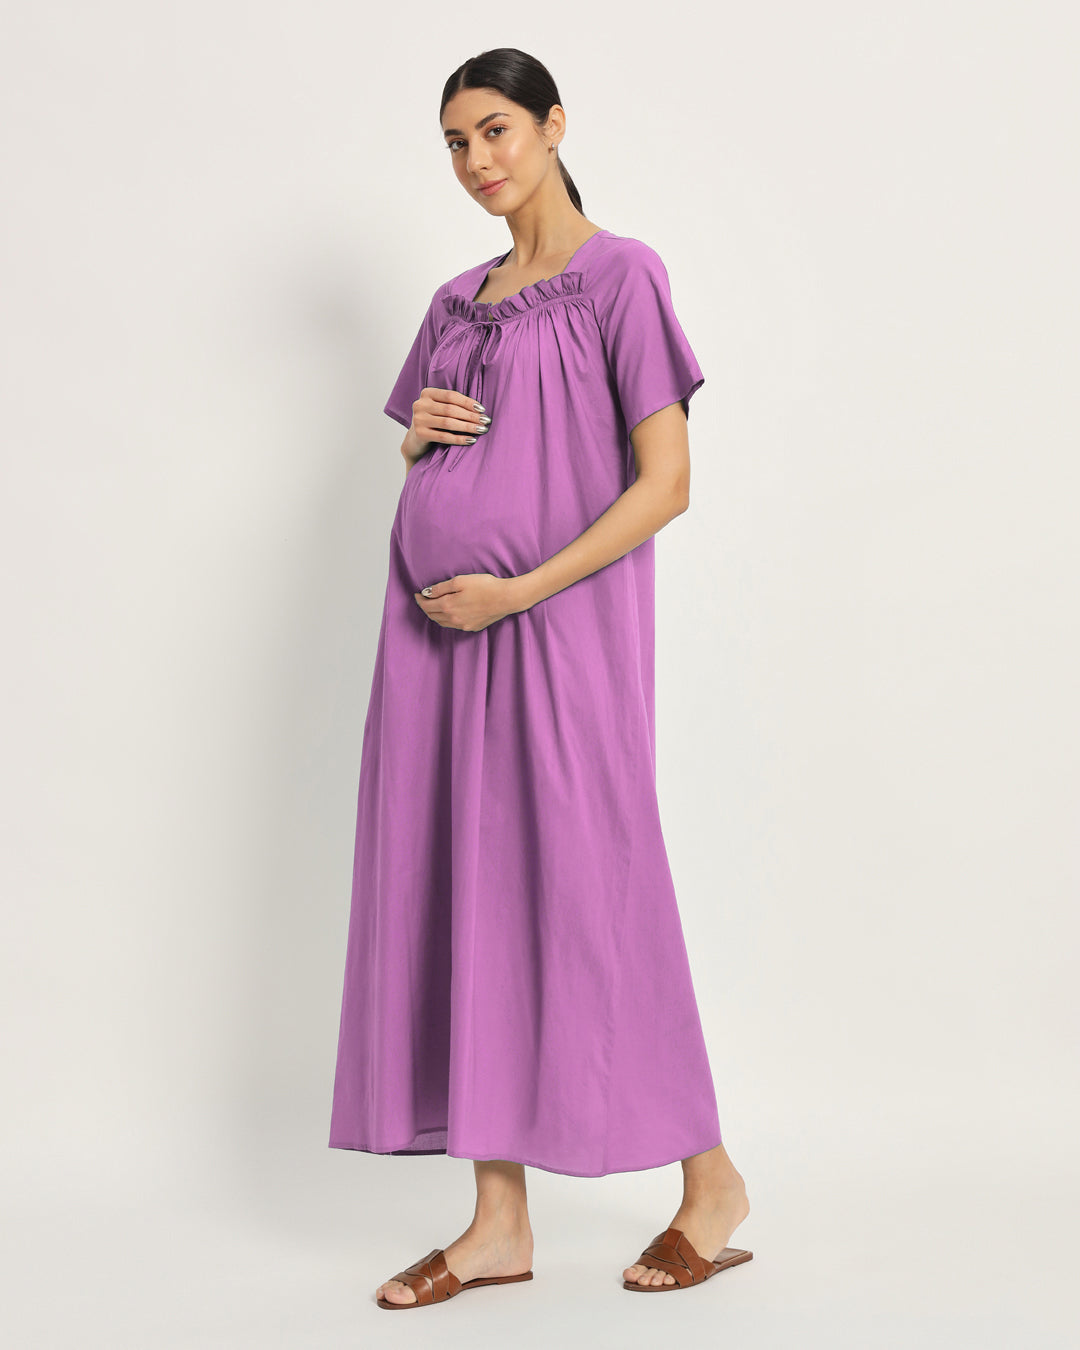 Combo: Black & Wisteria Purple Nurture N' Shine Maternity & Nursing Dress